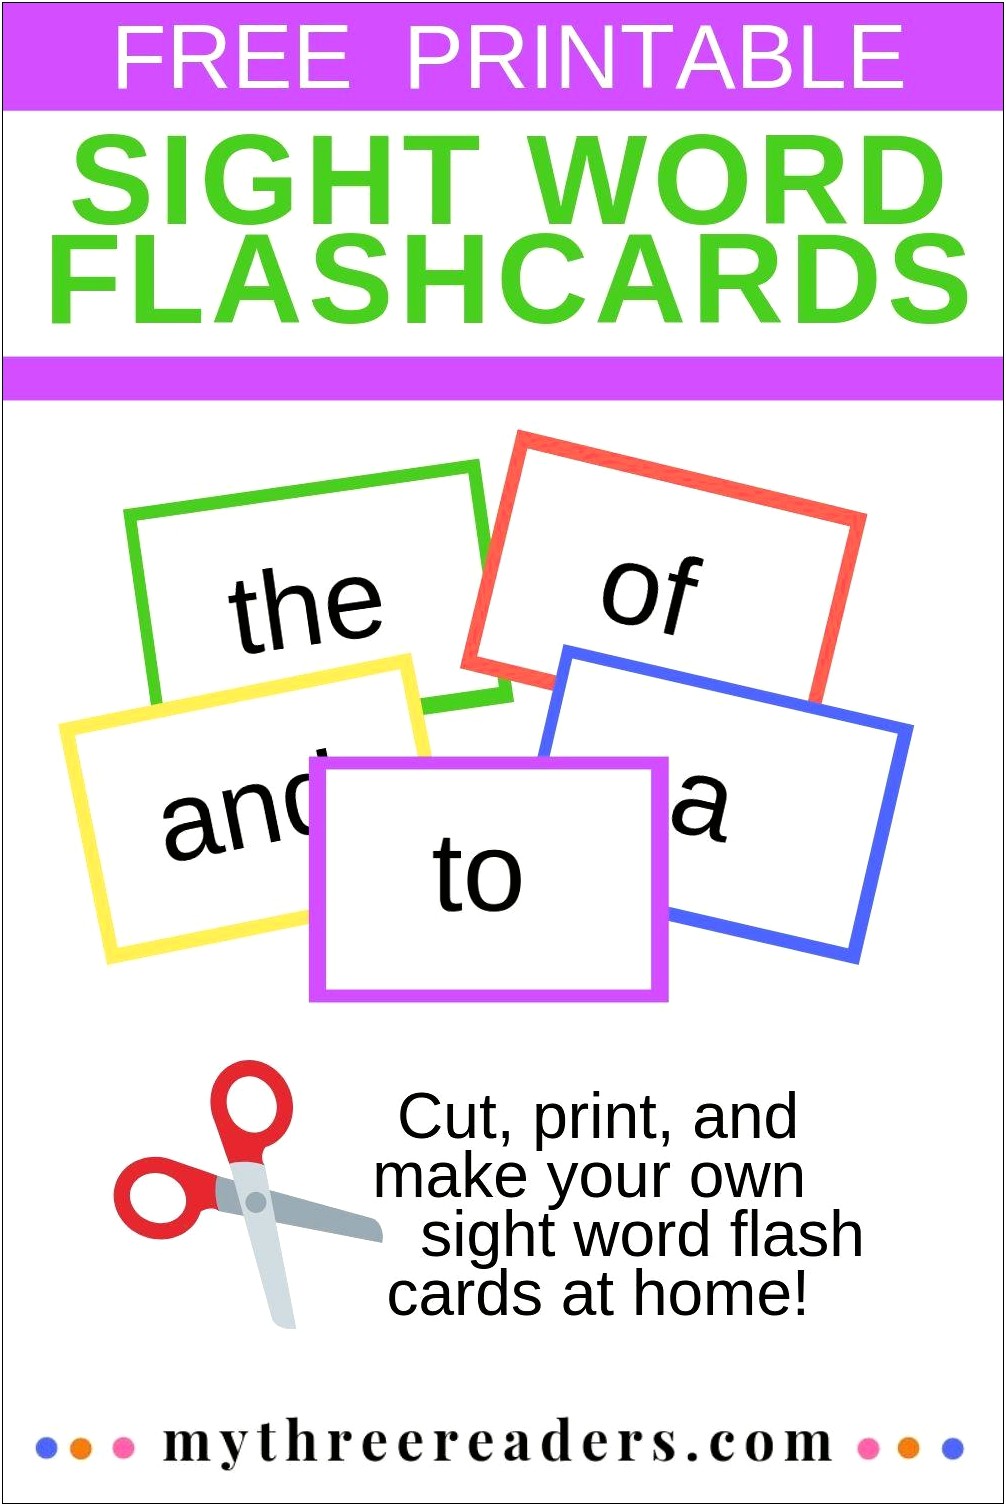 free-printable-blank-flash-cards-template-templates-resume-designs-7rjxlznjln